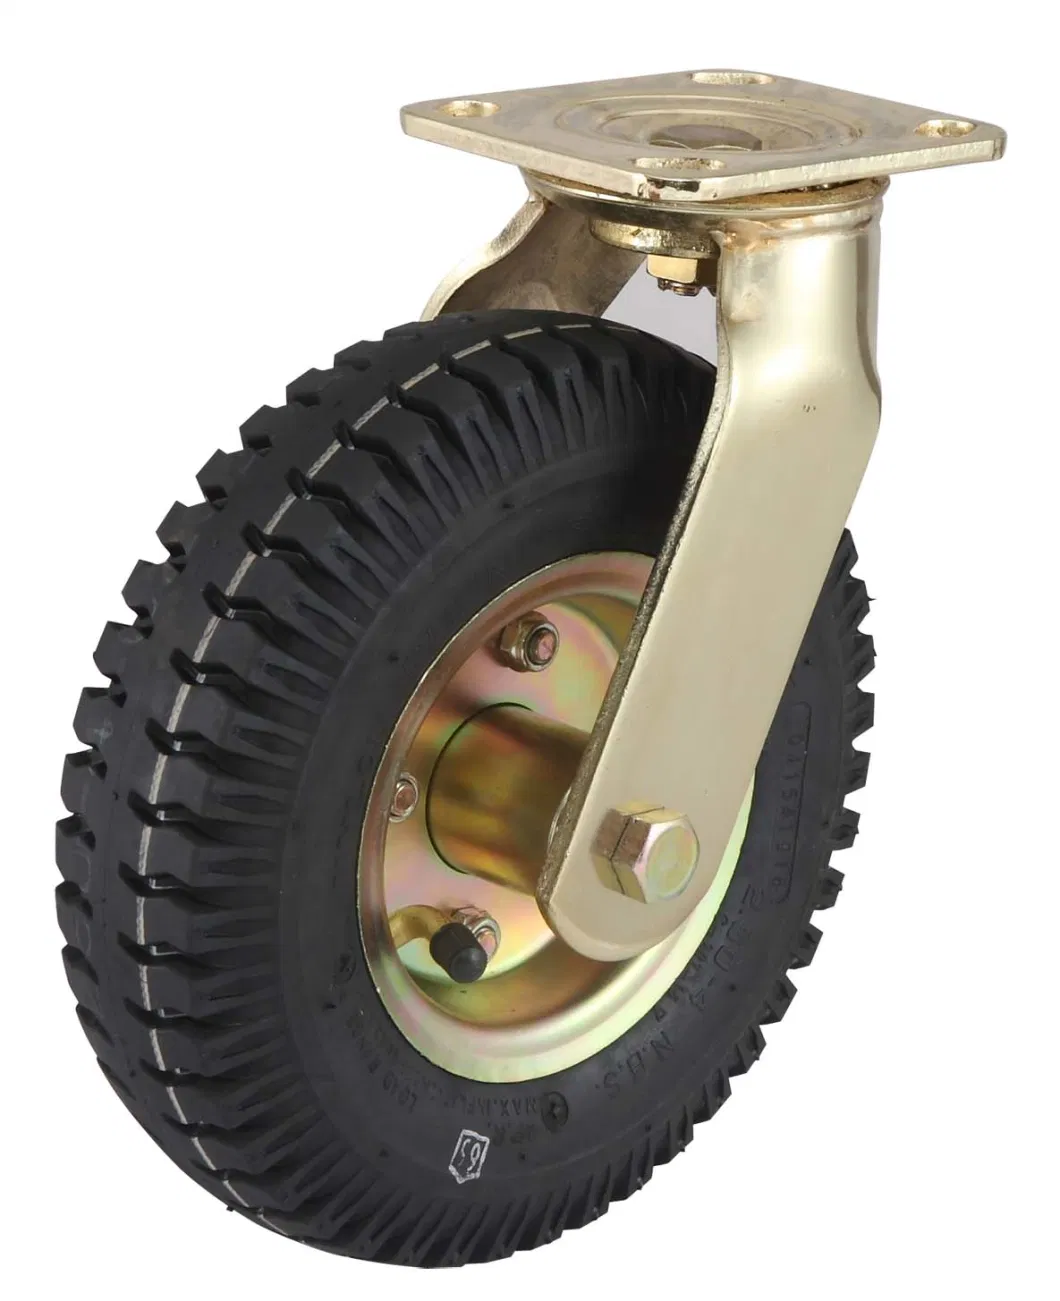 Pneumatic Wheel with Metal Rim for Wheelbarrow